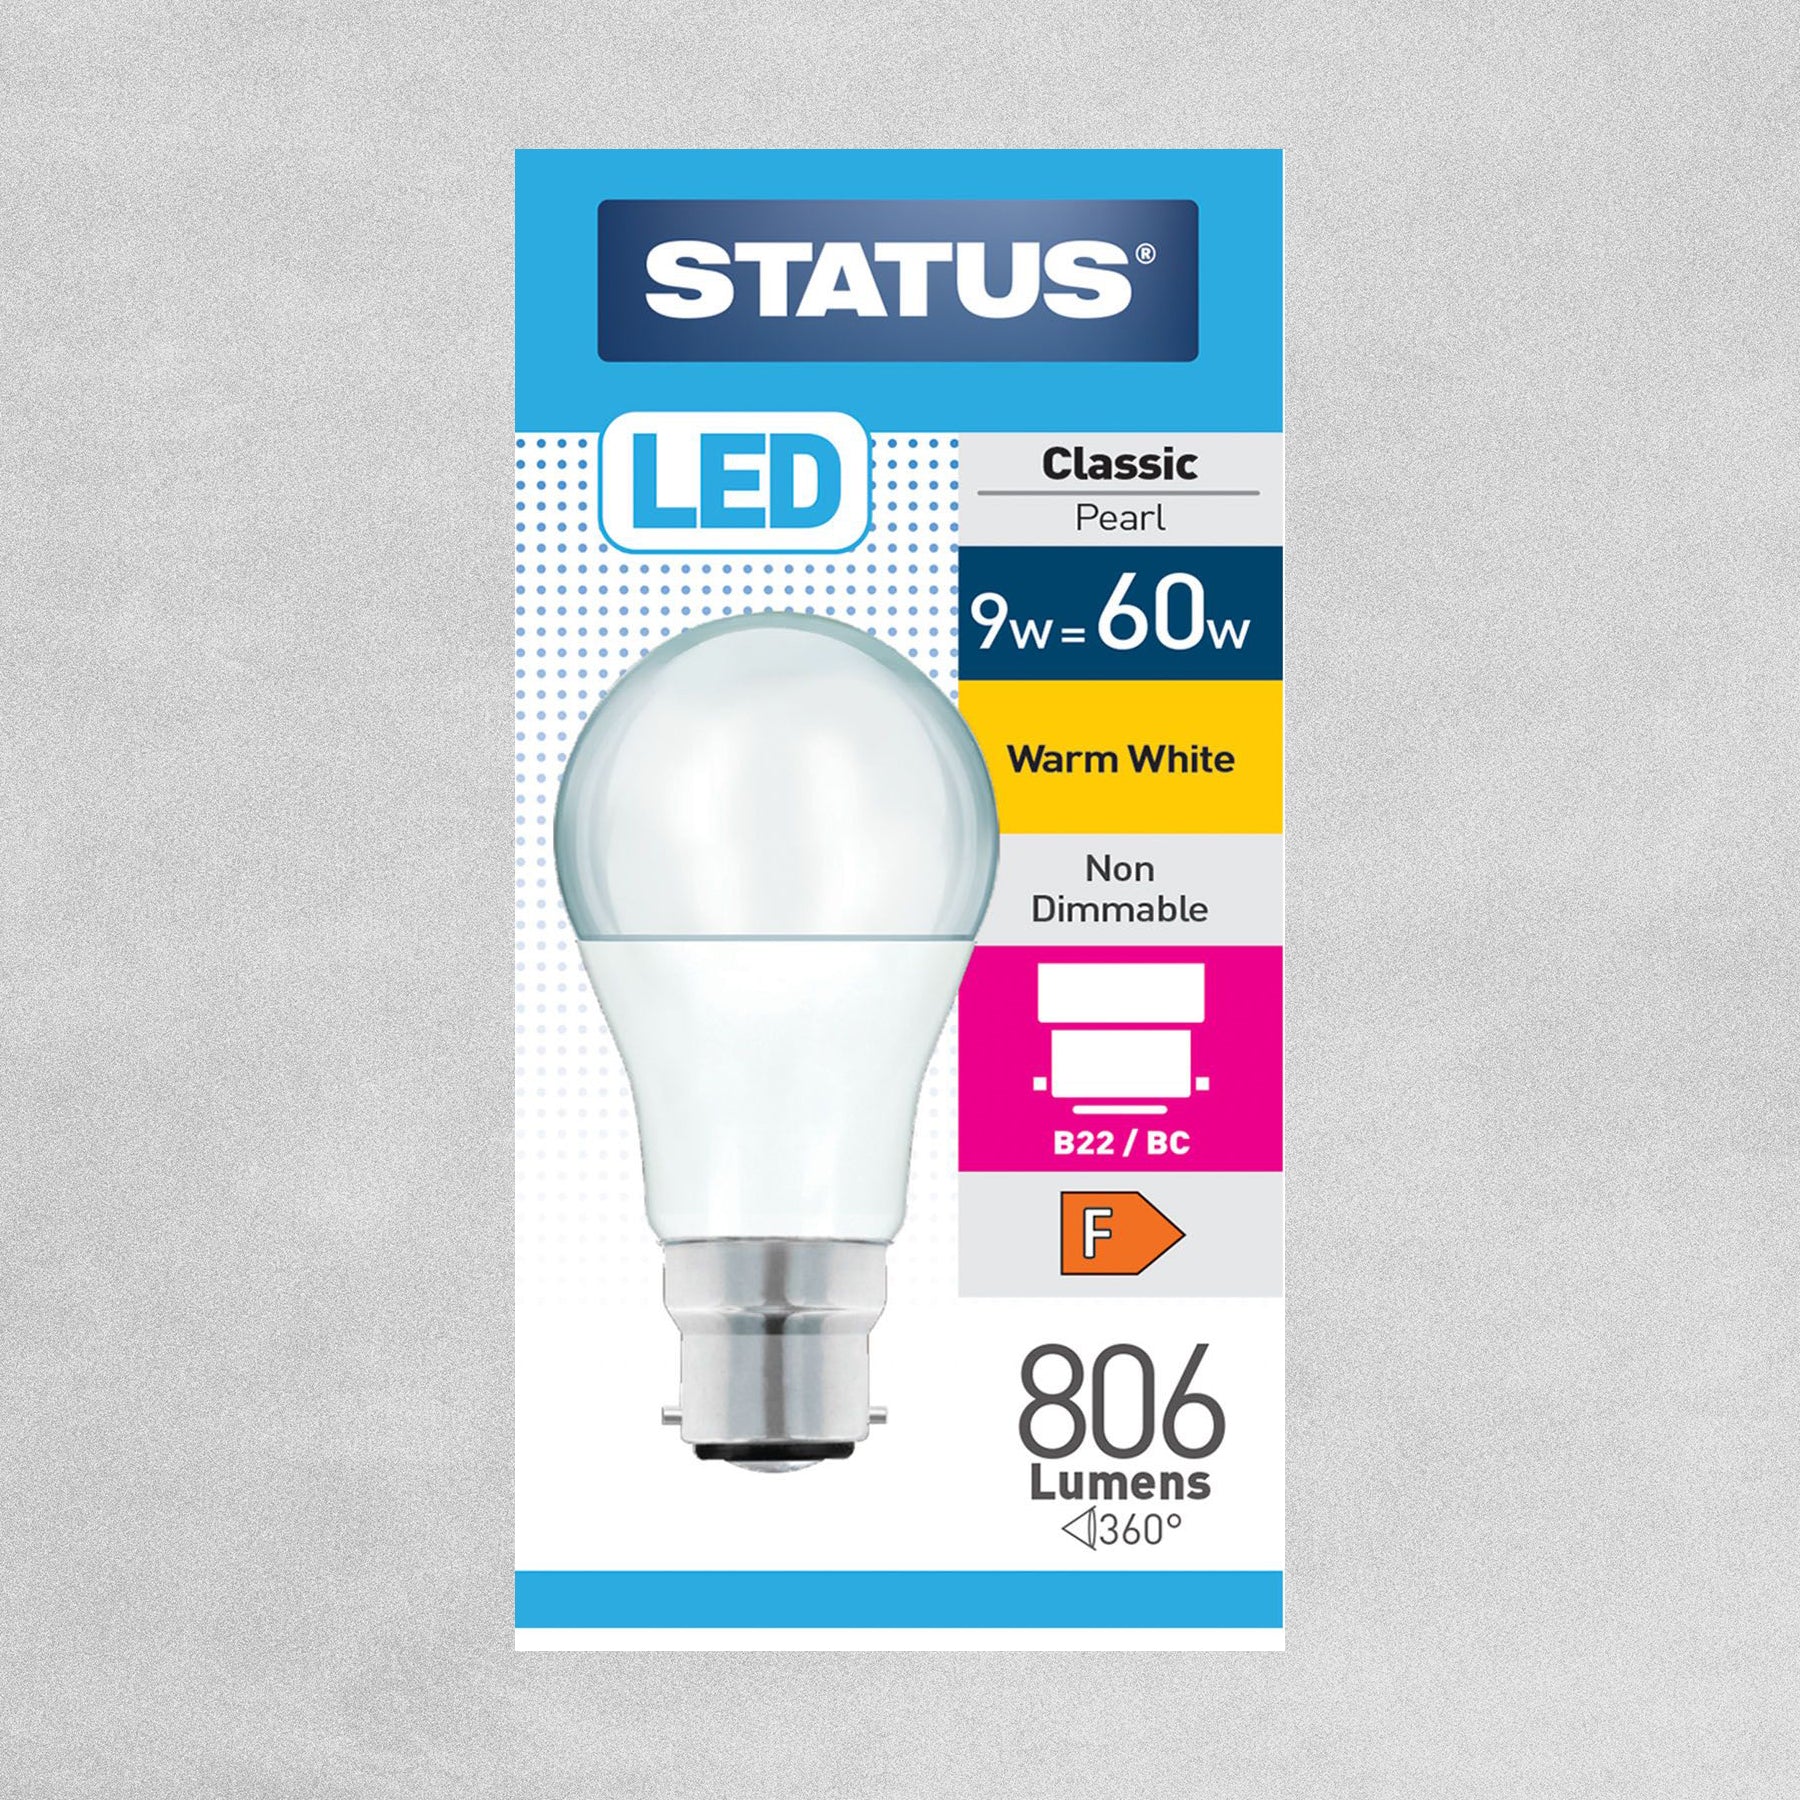 Status LED Classic Pearl Bulb B22/BC 9w=60w - Warm White